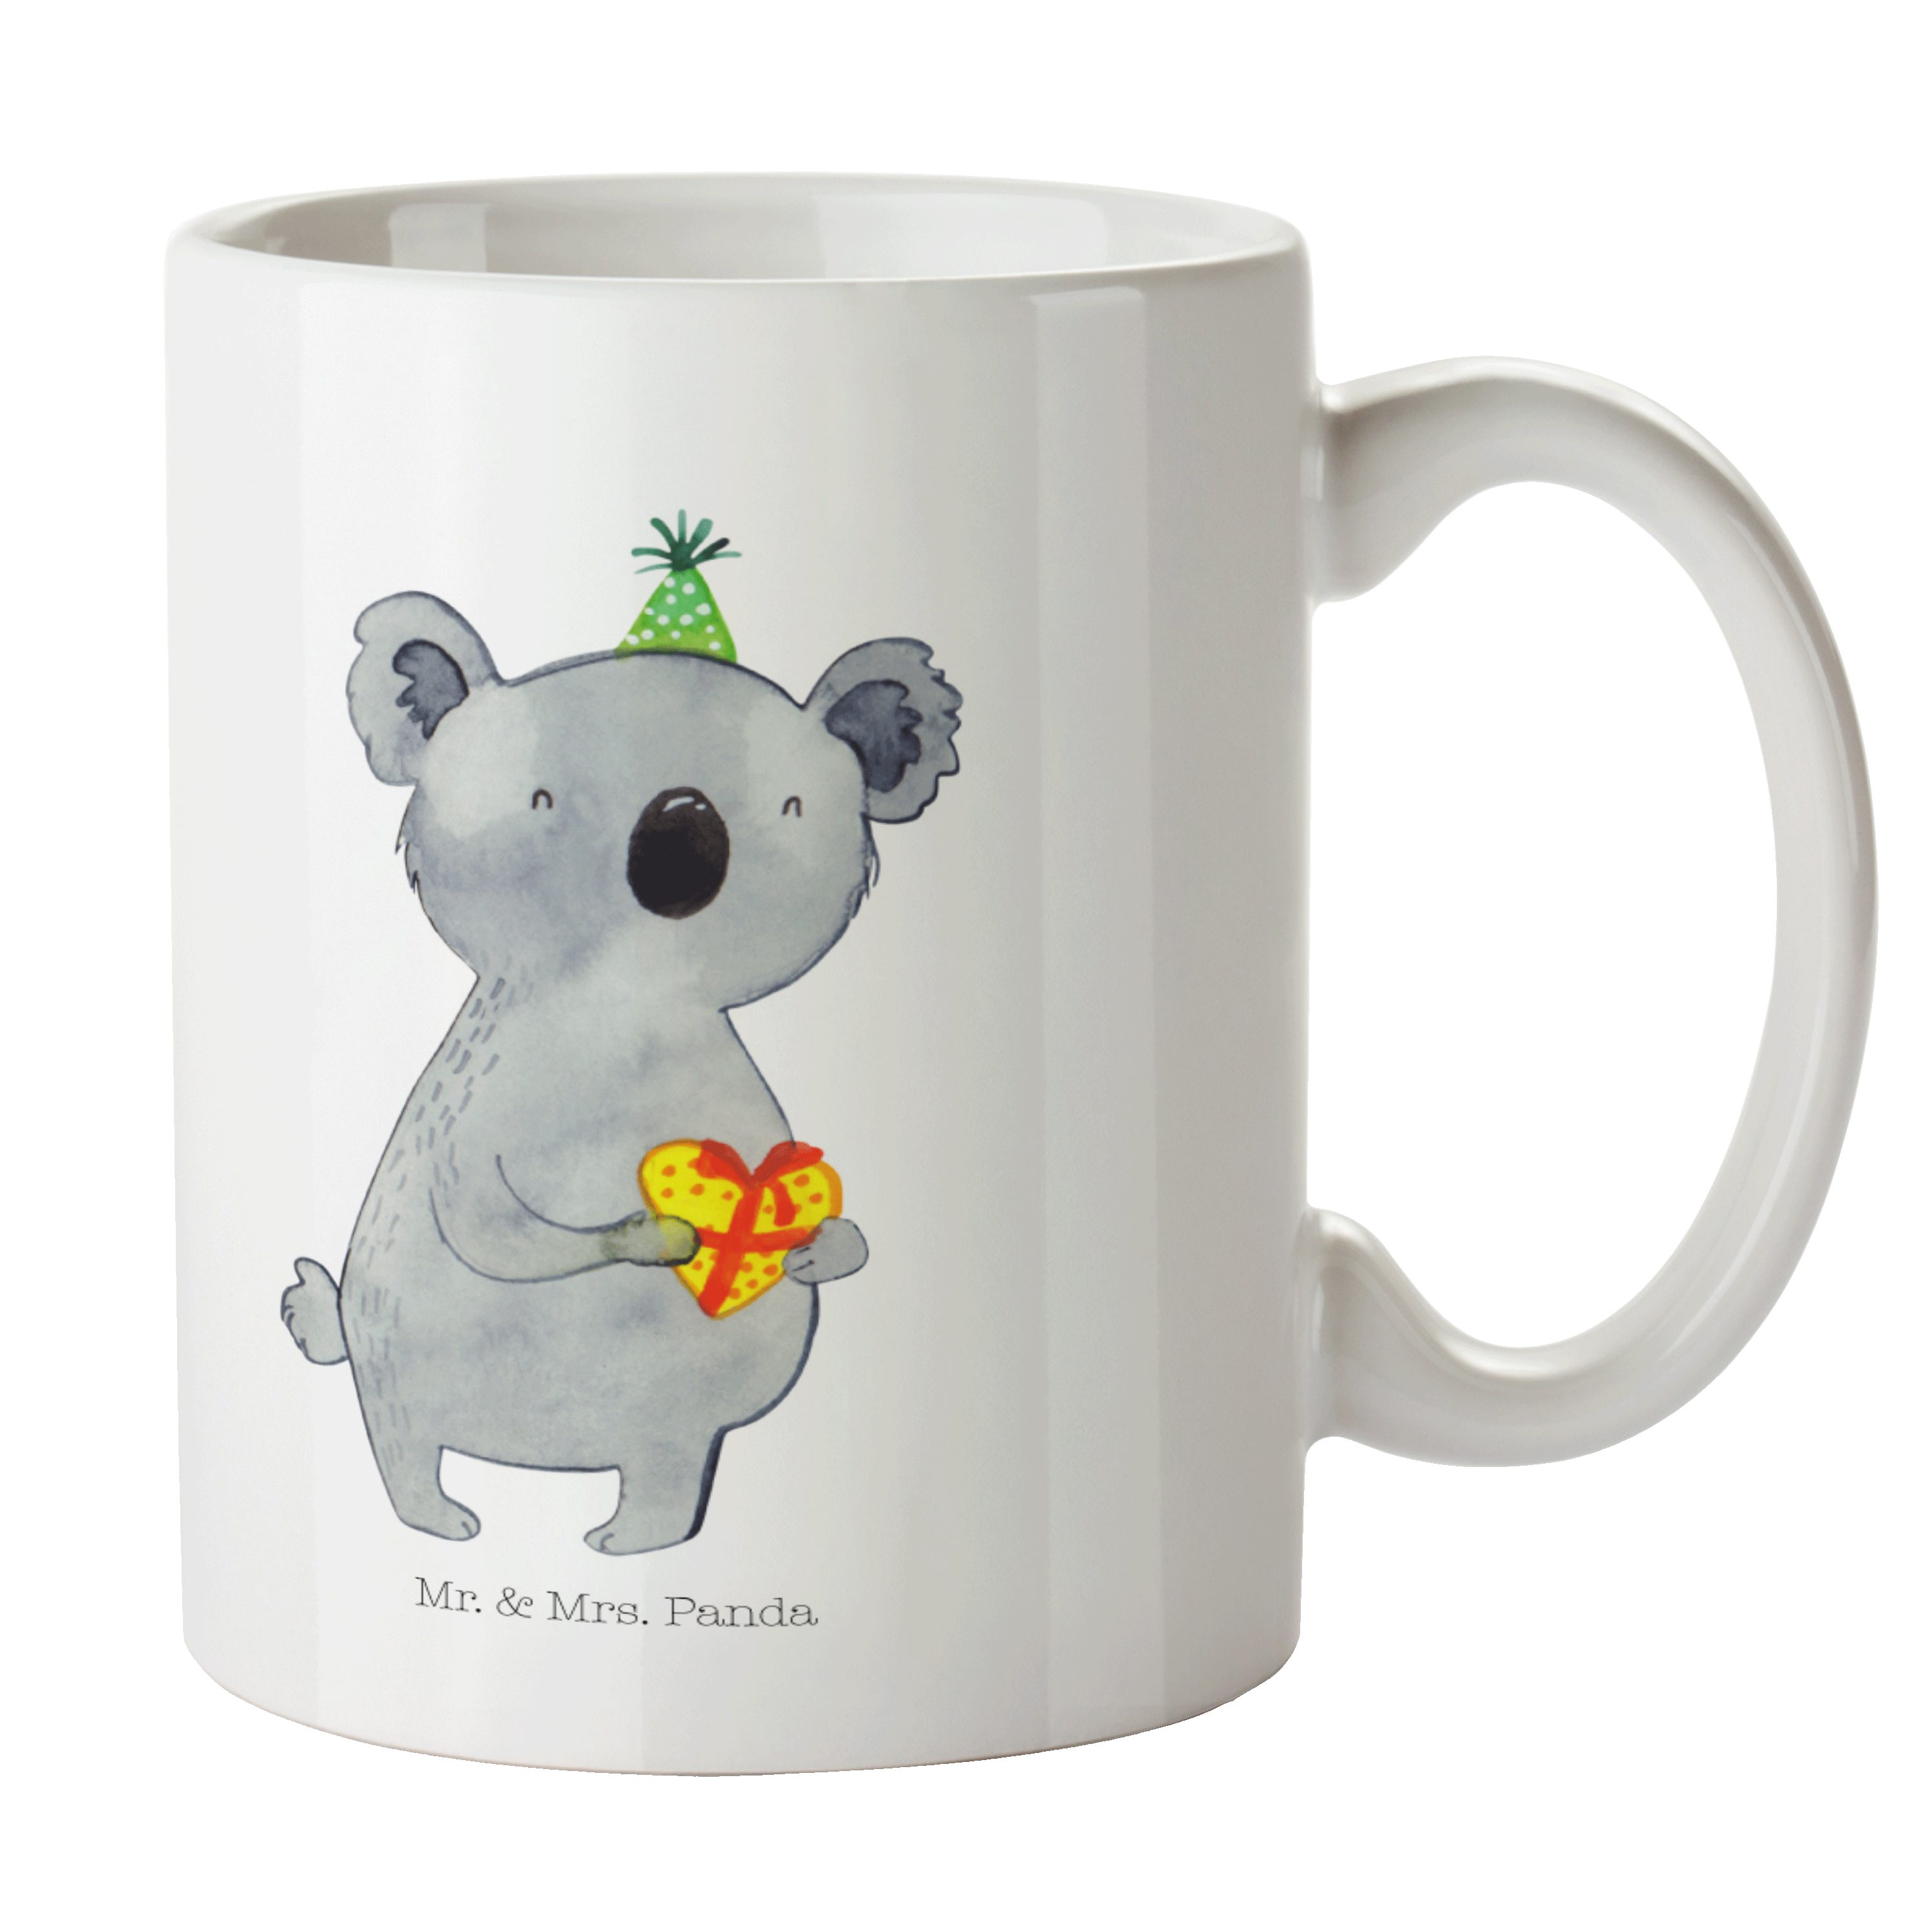 Mr. & Mrs. Panda Tasse Koala Geschenk - Weiß - Kaffeetasse, Party, Tasse Sprüche, Koalabär, Keramik